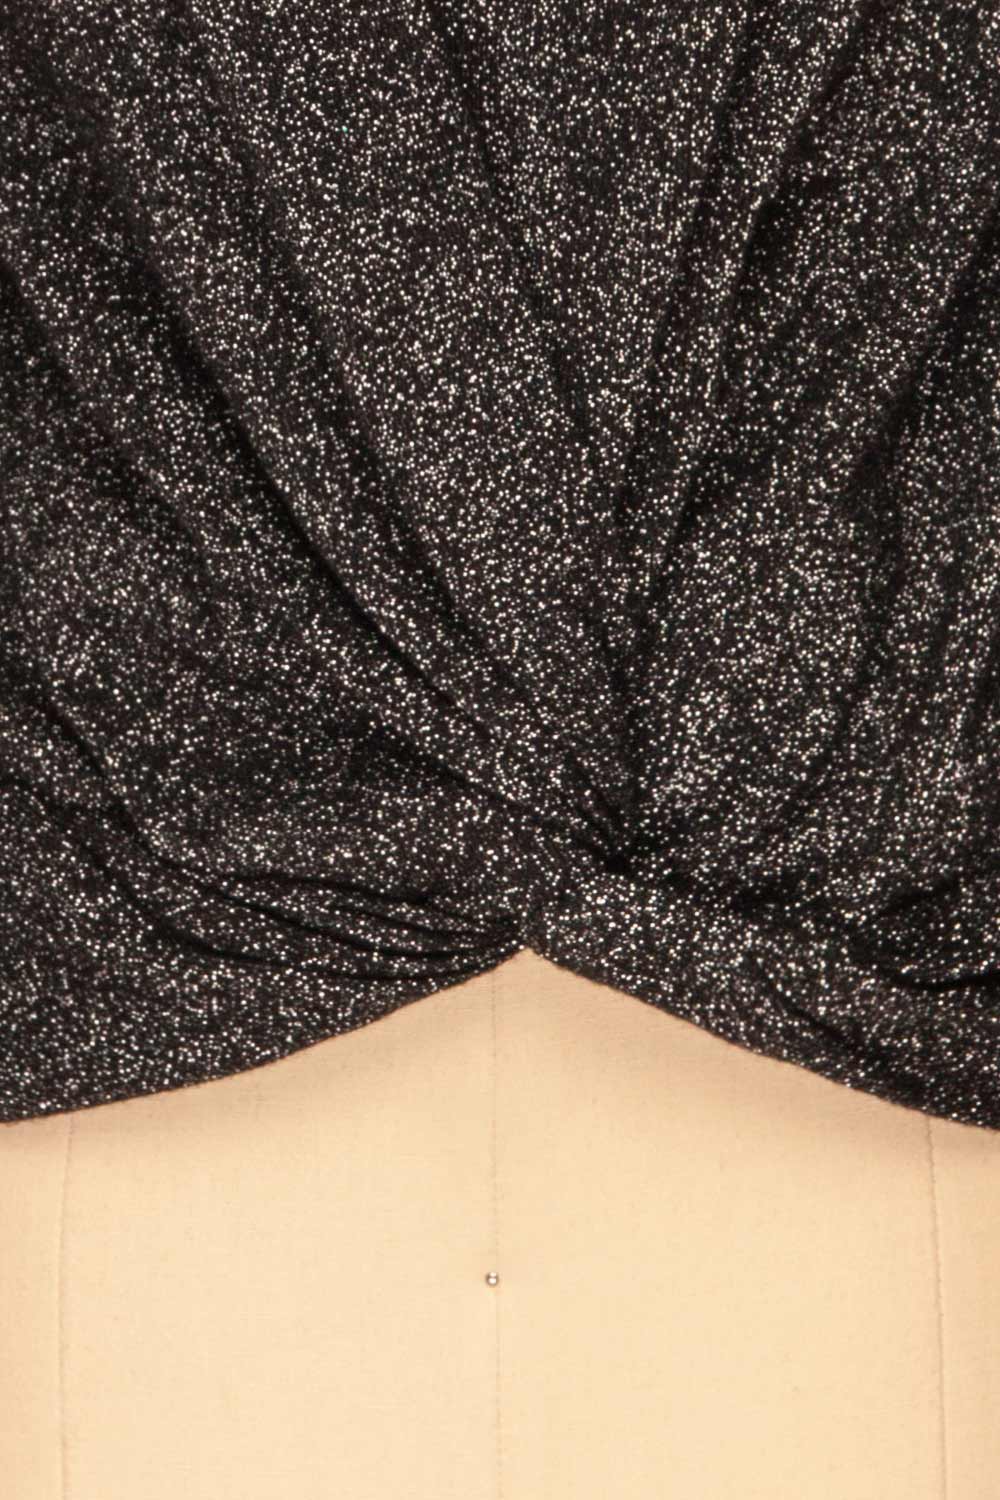 Mychaljo Black Sparkly Long Sleeved Top | La Petite Garçonne bottom close-up